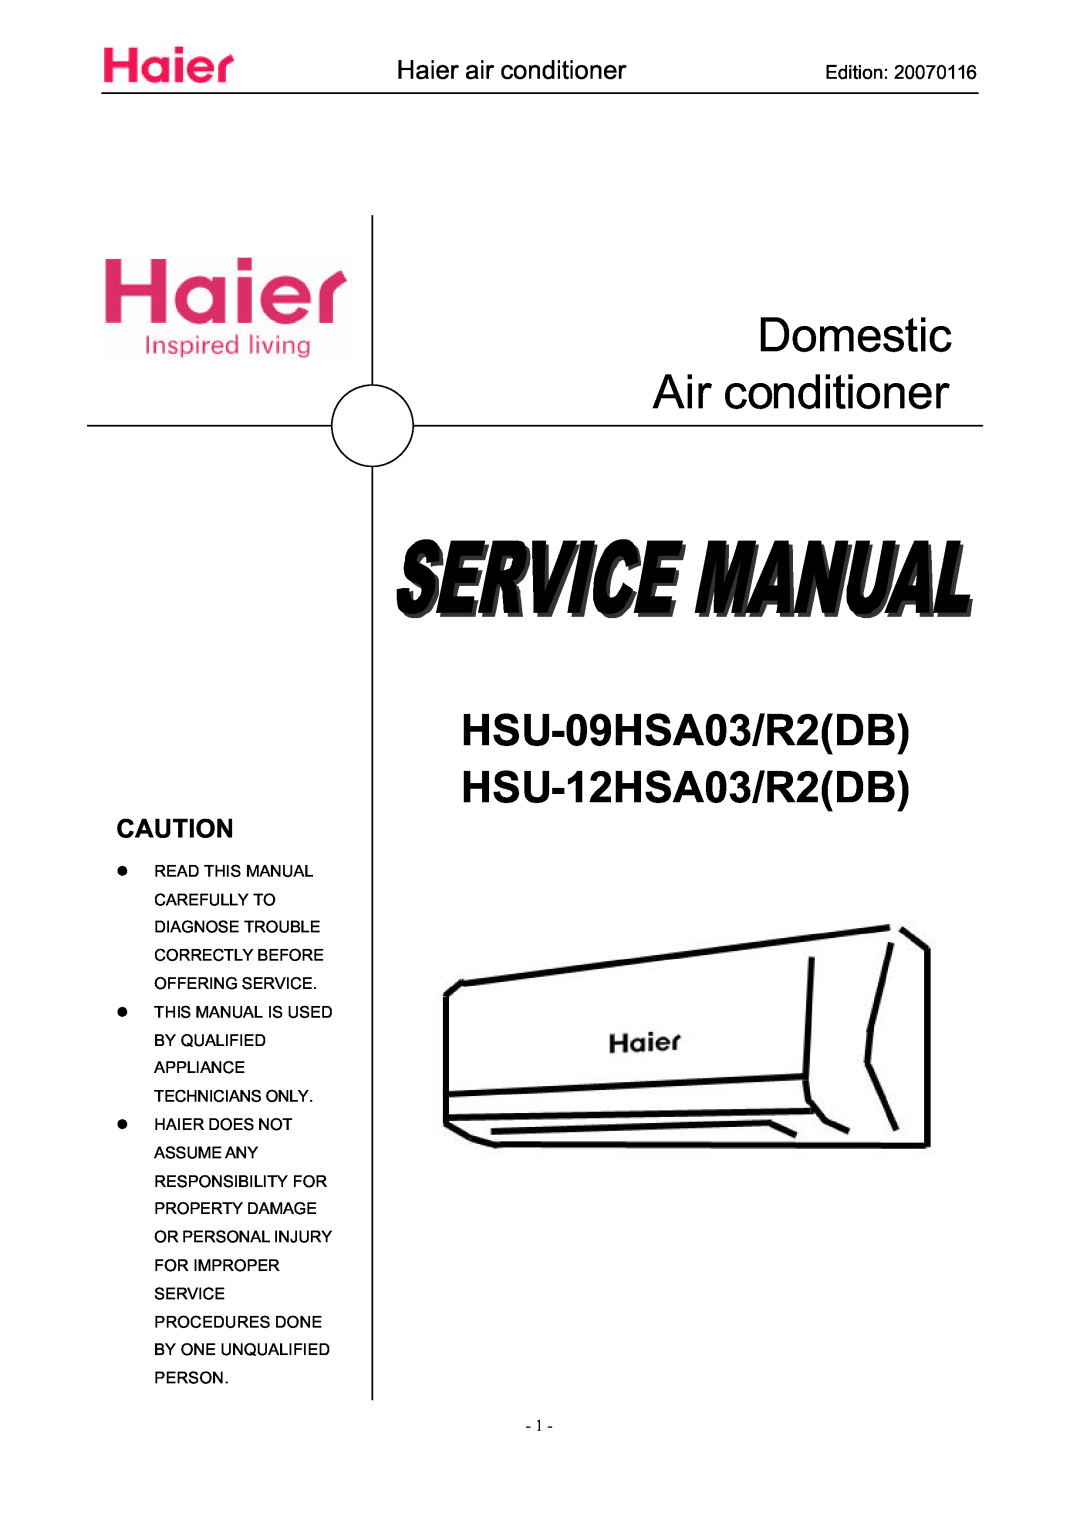 Haier HSU-12HSA03/R2(DB), HSU-09HSA03/R2(DB) manual Domestic Air conditioner, HSU-09HSA03/R2DB HSU-12HSA03/R2DB, Edition 